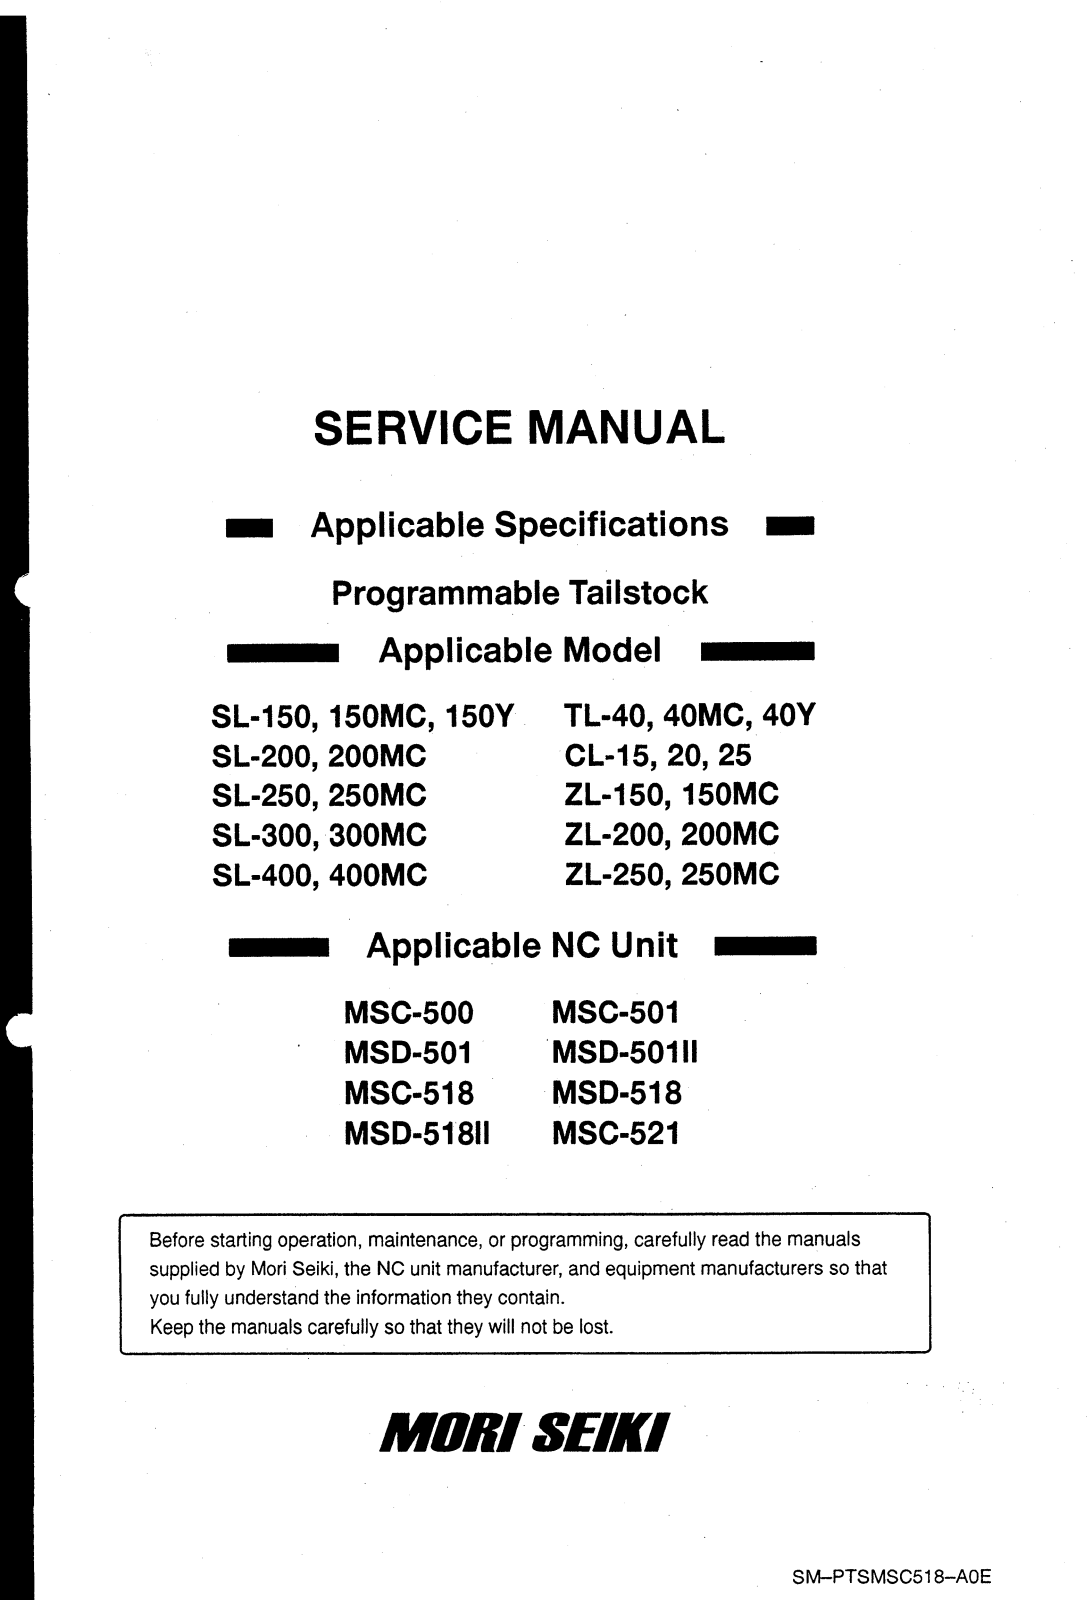 mori seiki SL-150, 150MC, 150Y, SL-200, 200MC Service Manual